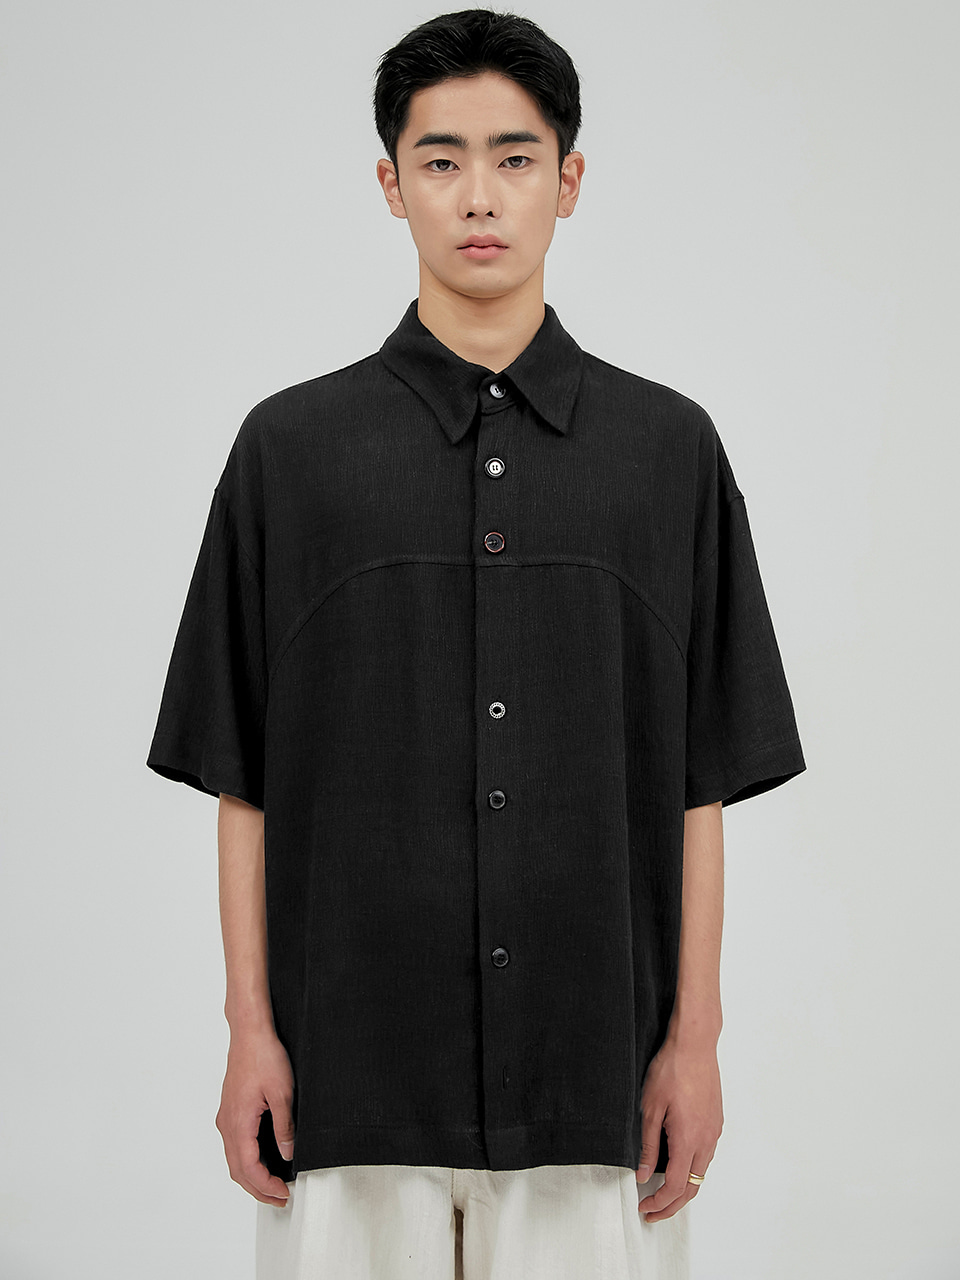 FLARE UP플레어업 E21 Western Short-sleeved Linen Shirt - Black (FU-195)